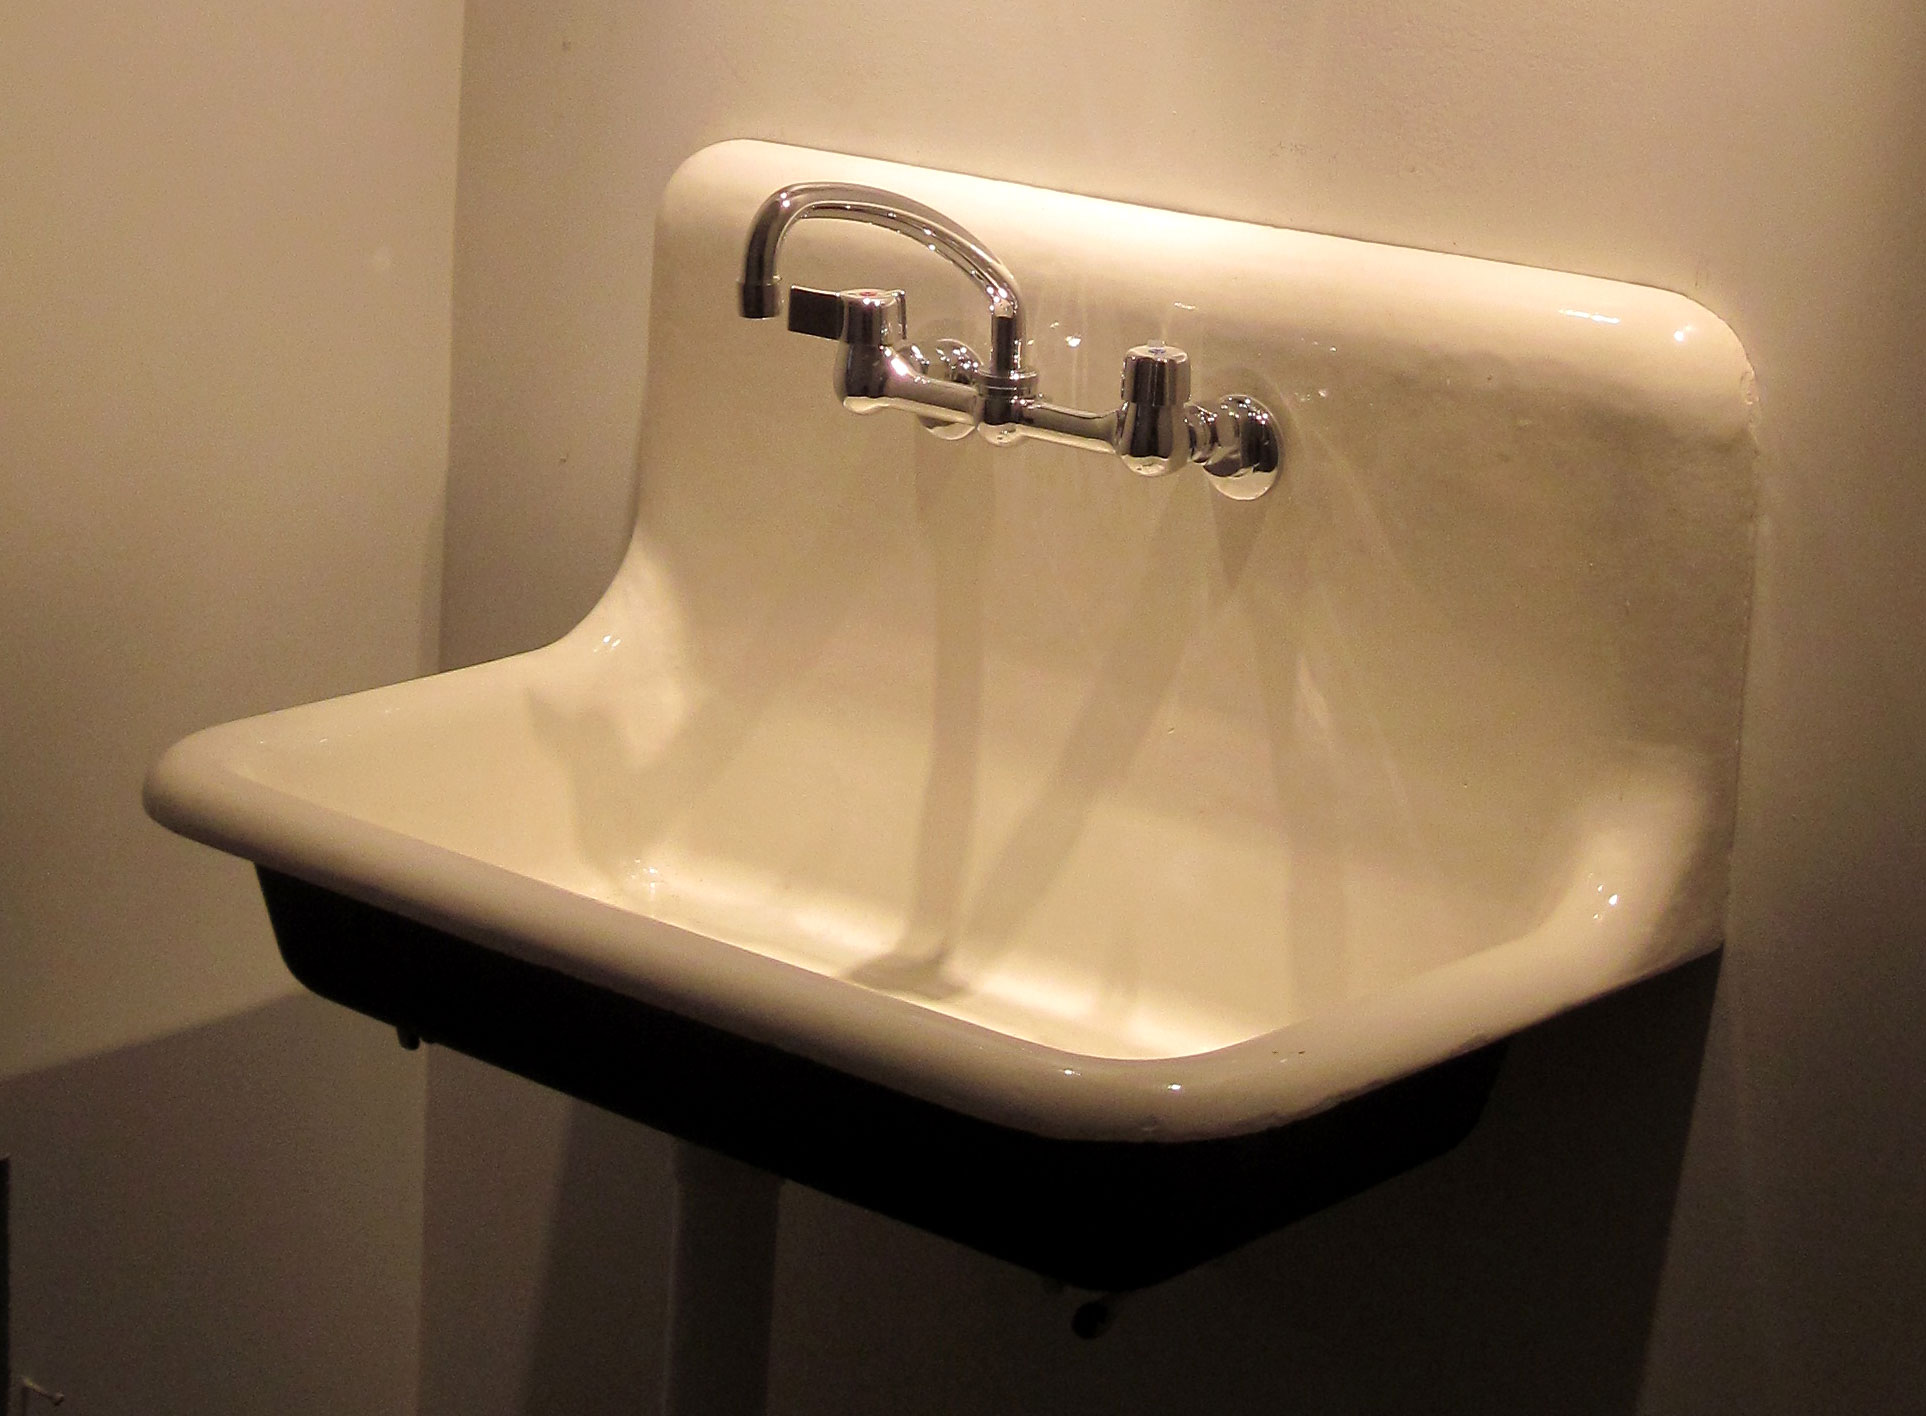 Cast Iron Sink As A Work Of Art Statlerprojects S Blog